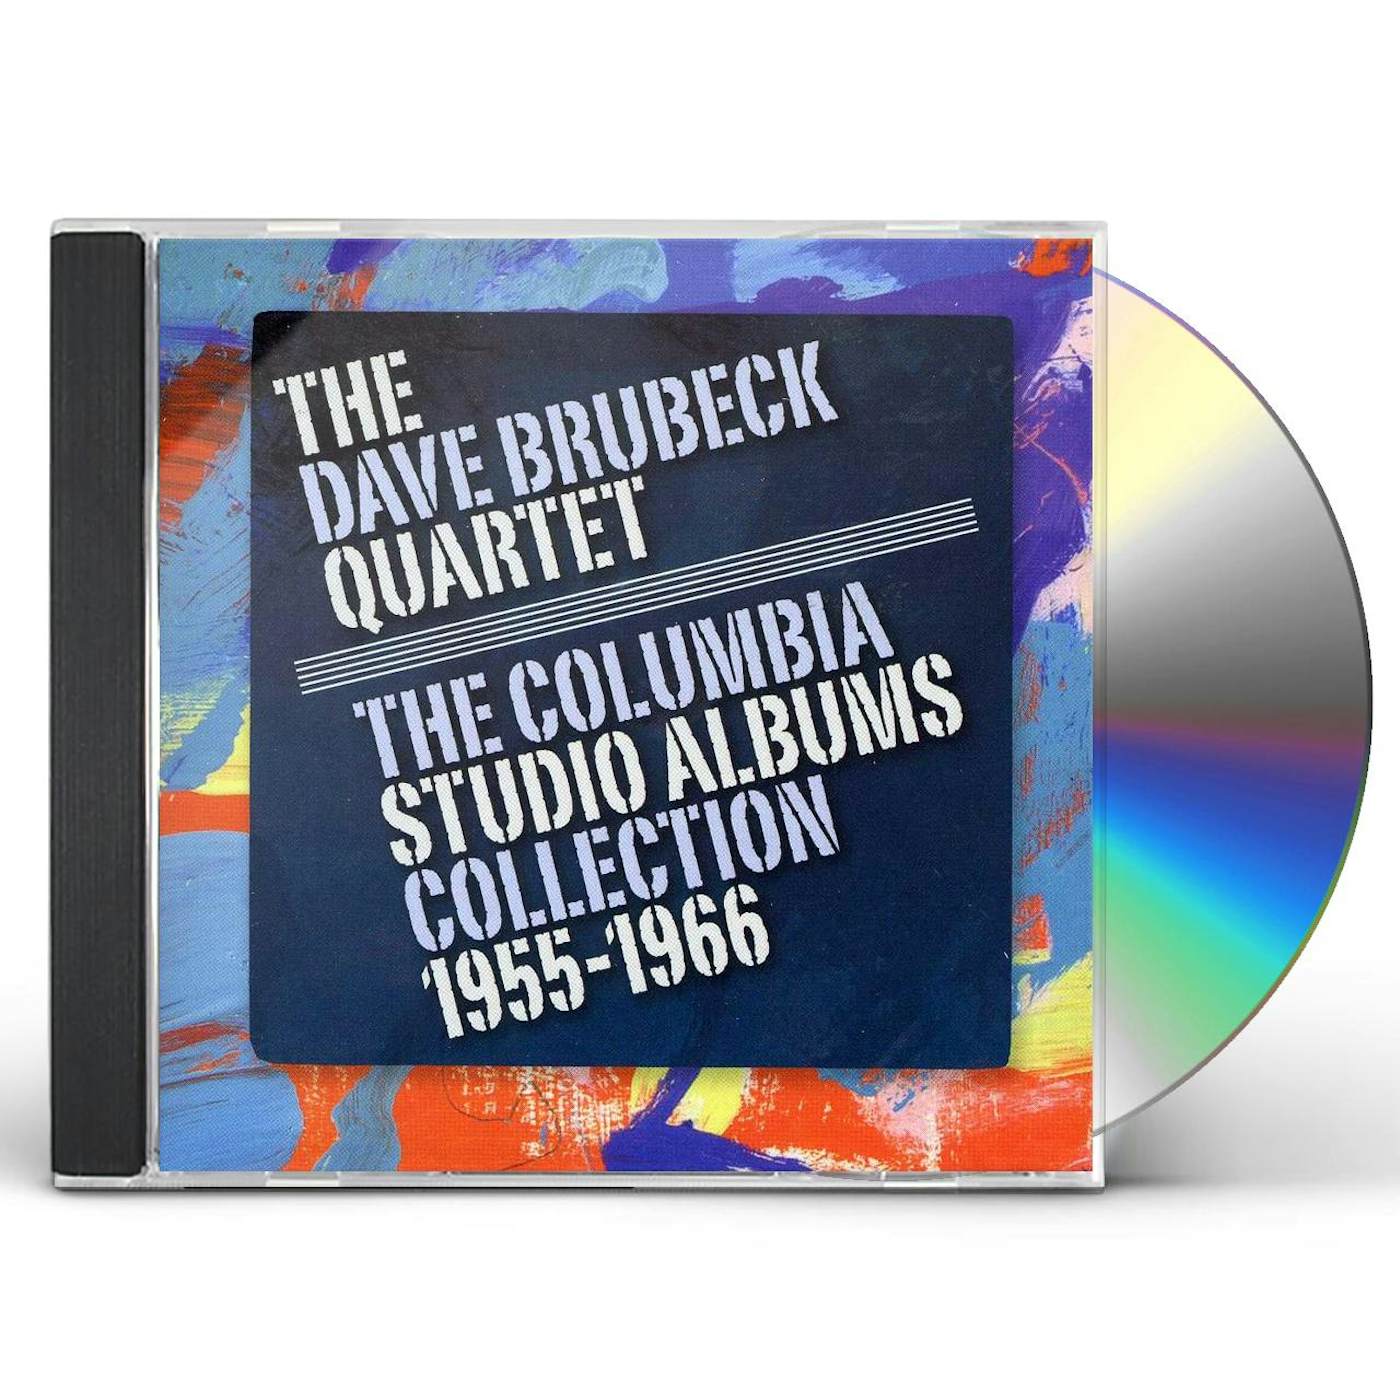 Dave Brubeck COLUMBIA STUDIO ALBUMS COLLECTION 1955-1966 CD